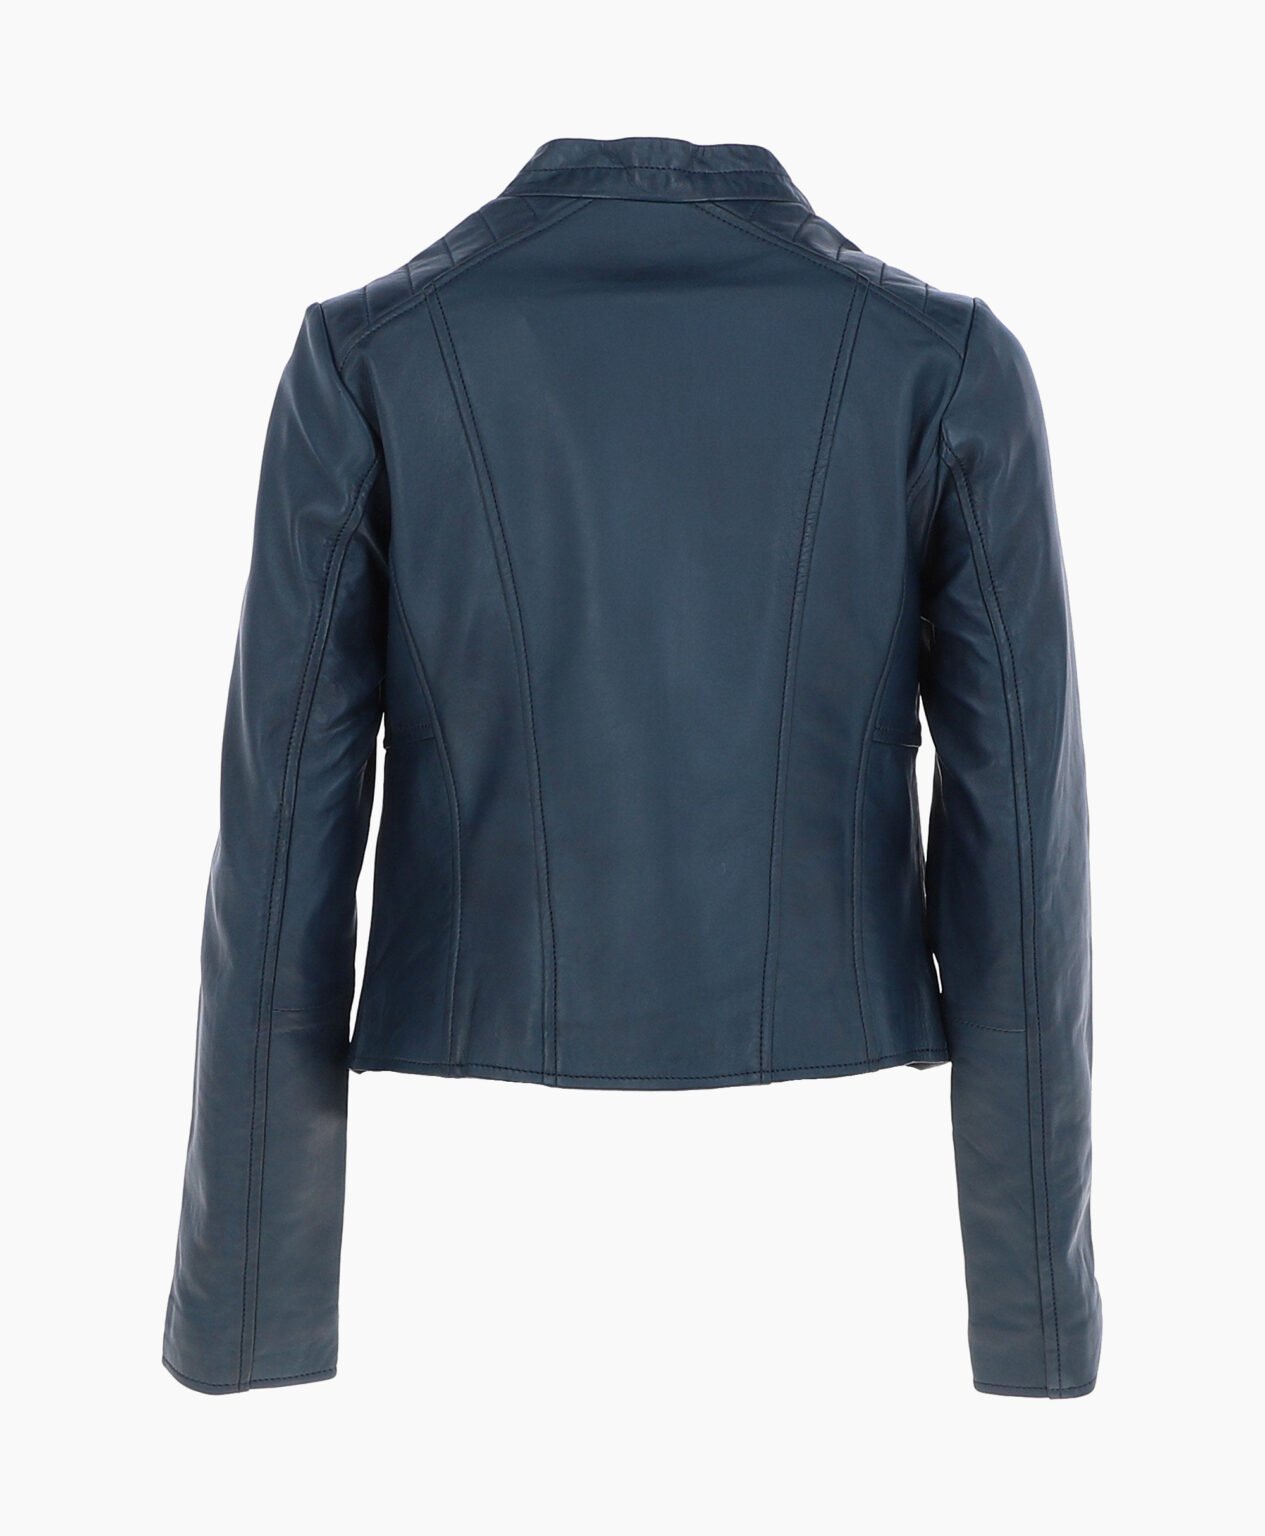 vogue-jacket-leather-biker-jacket-navy-ontario-image202